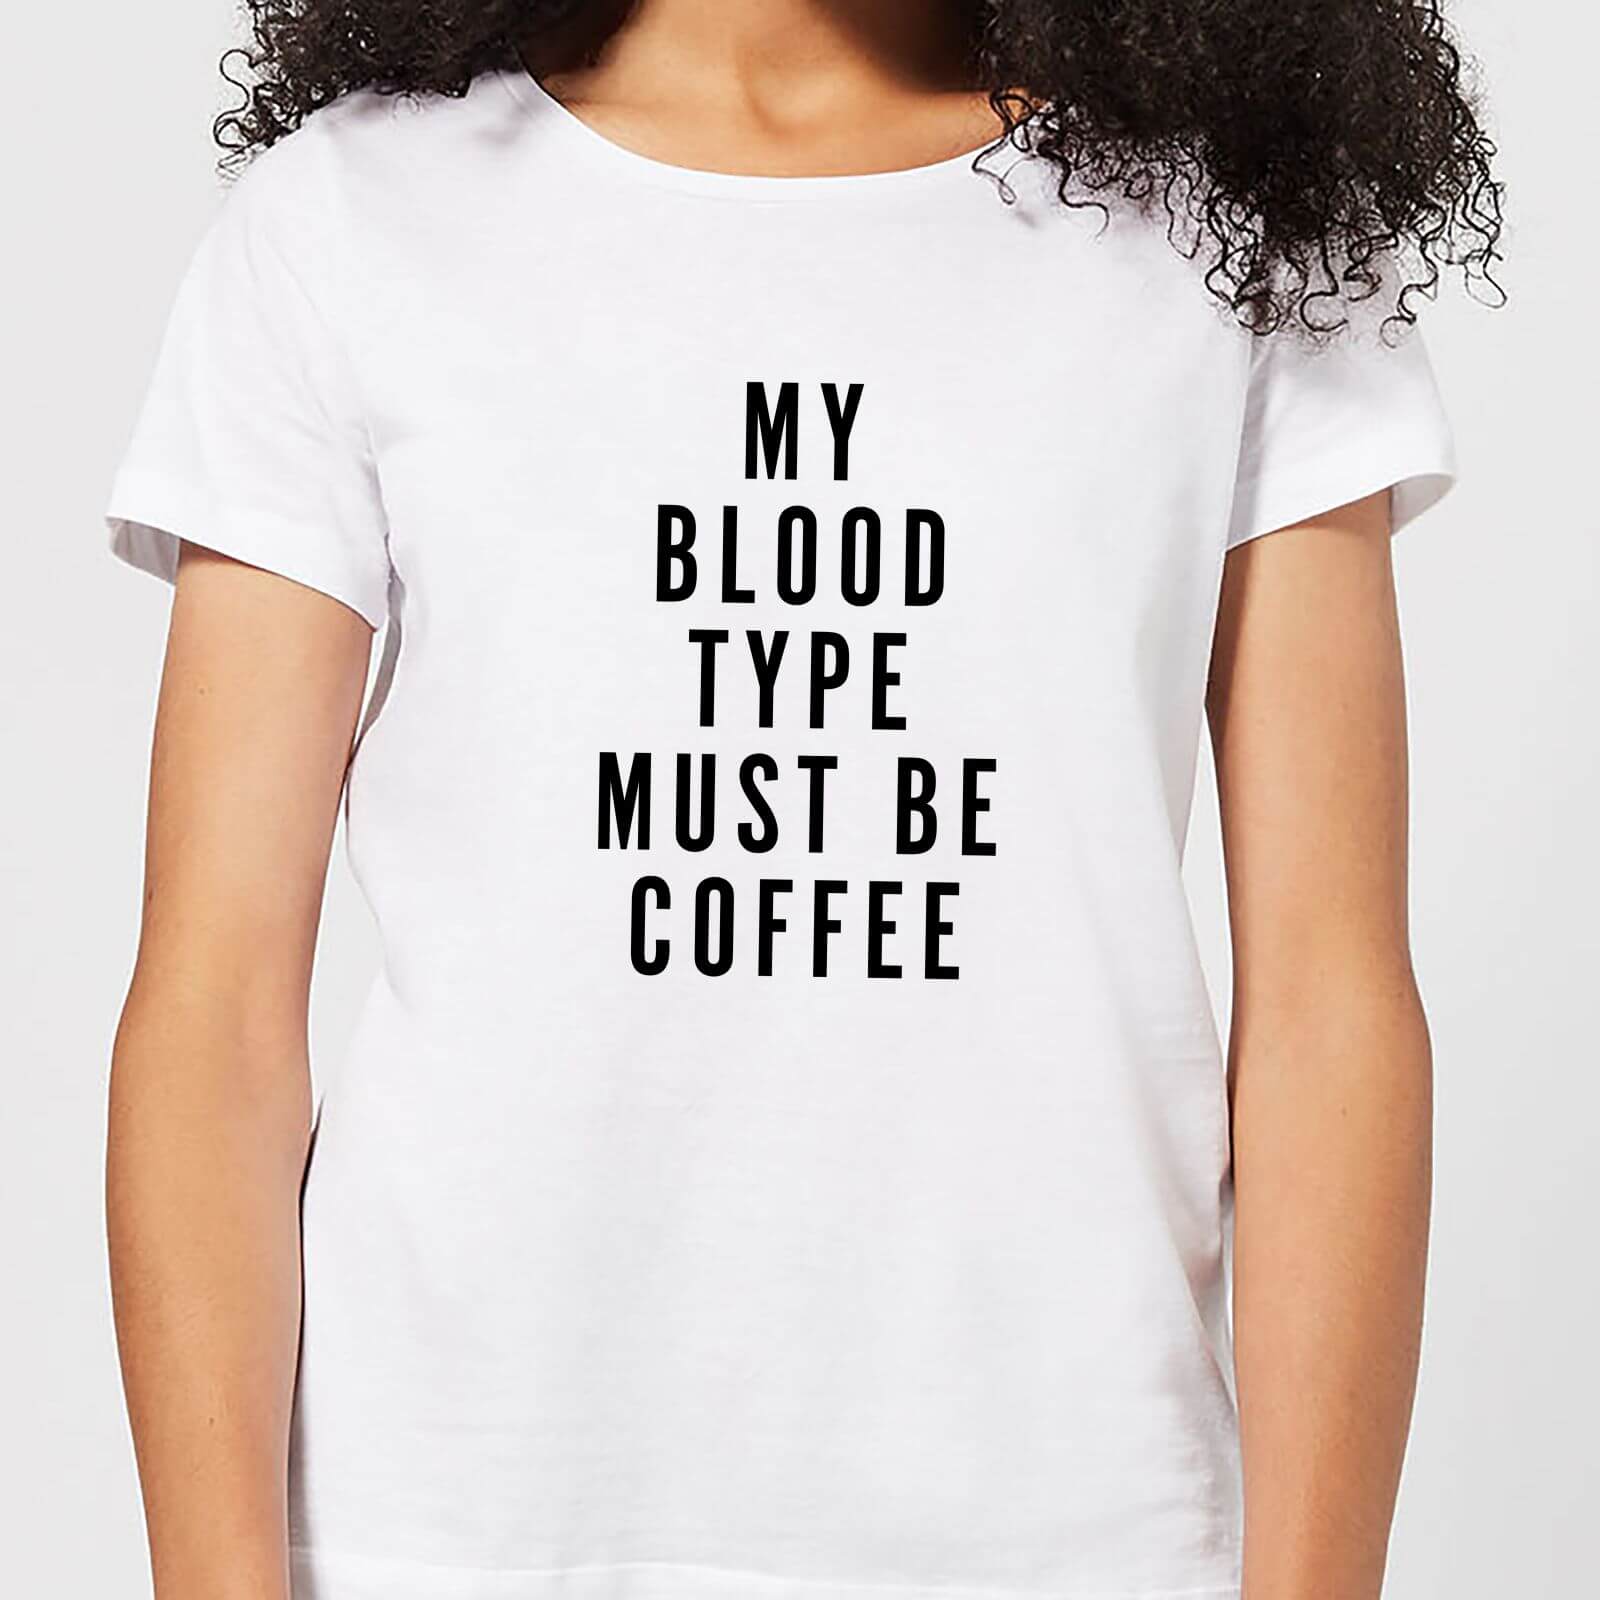 My Blood Type Must Be Coffee Women's T-Shirt - White - XL - White